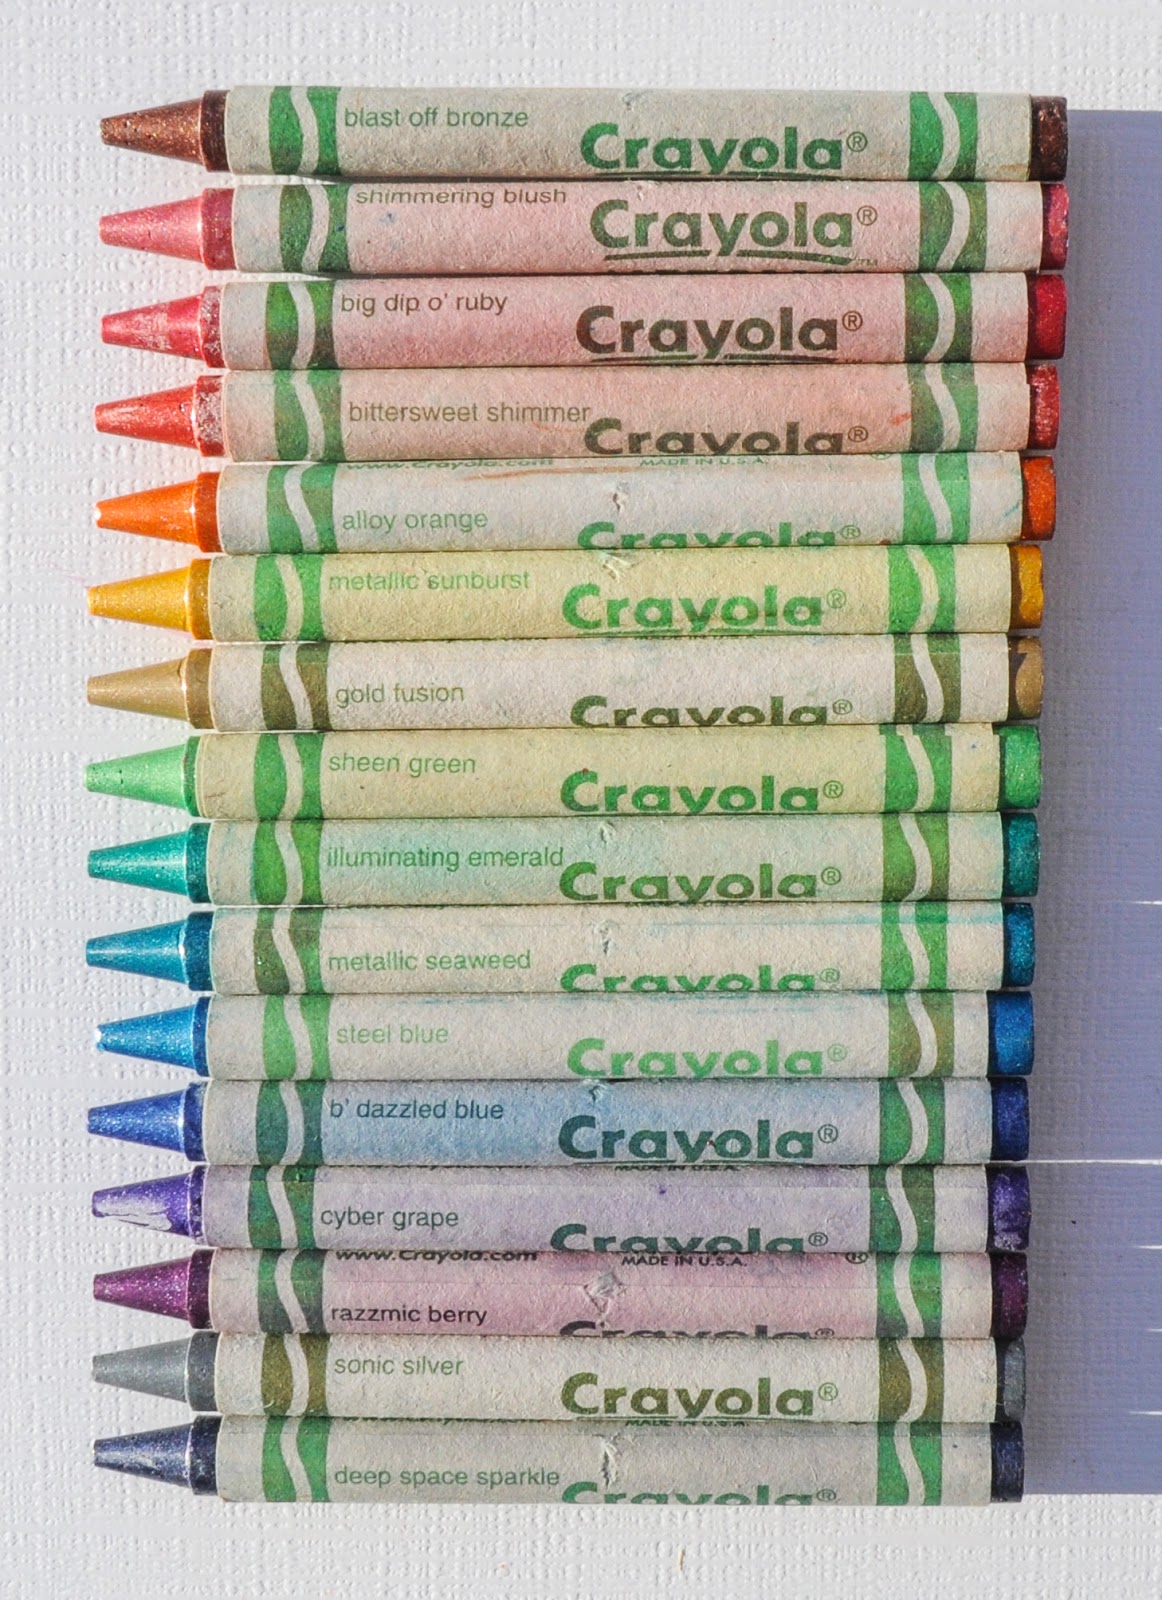 File:Crayola-metallicfx.jpg - Wikipedia